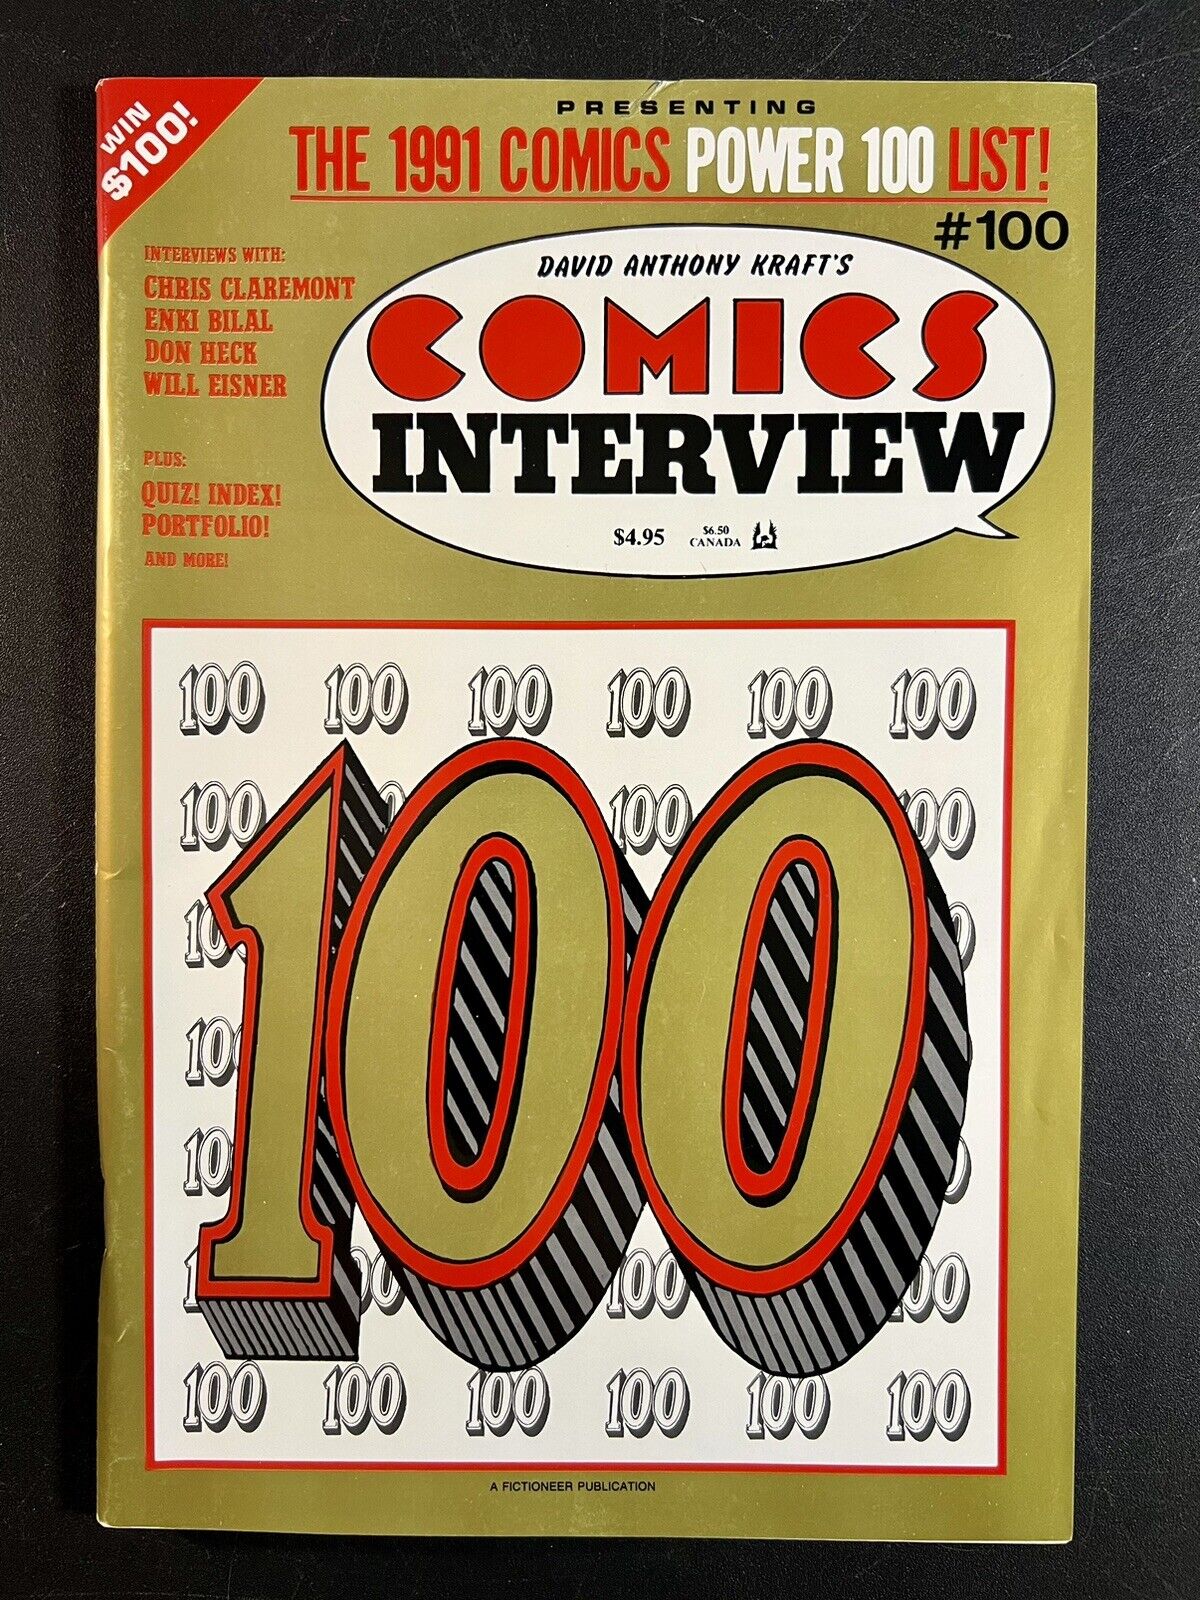 David Anthony Kraft’s~Comics Interview~1991 Power 100 List~Excellent Condition